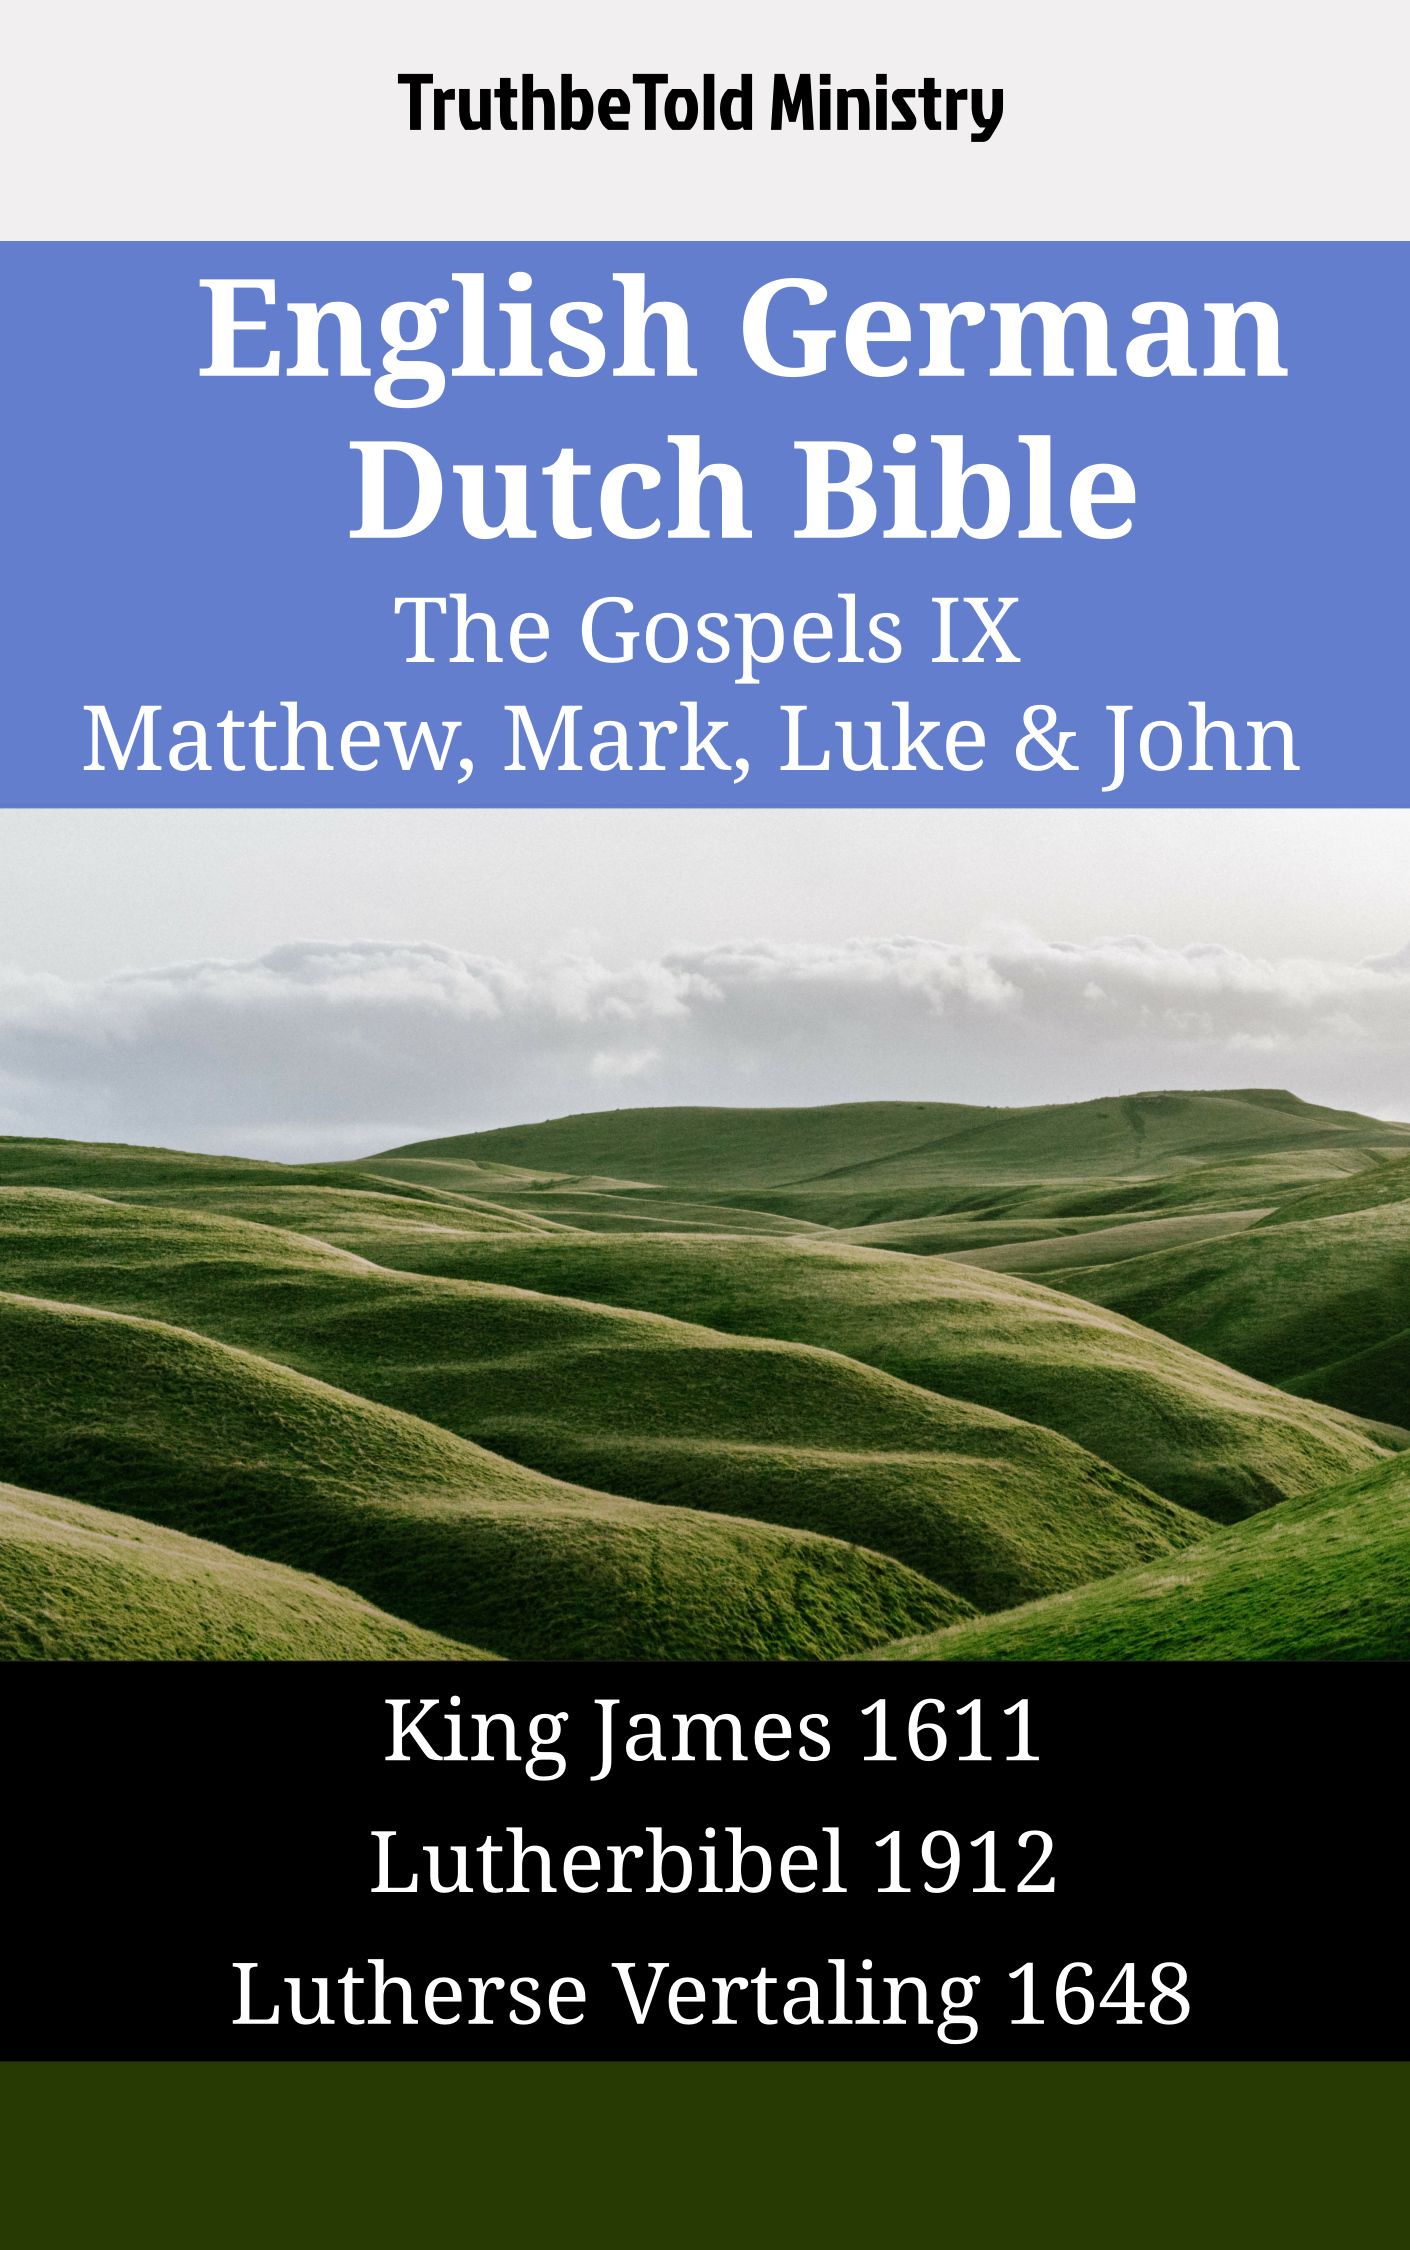 English German Dutch Bible - The Gospels IX - Matthew, Mark, Luke & John